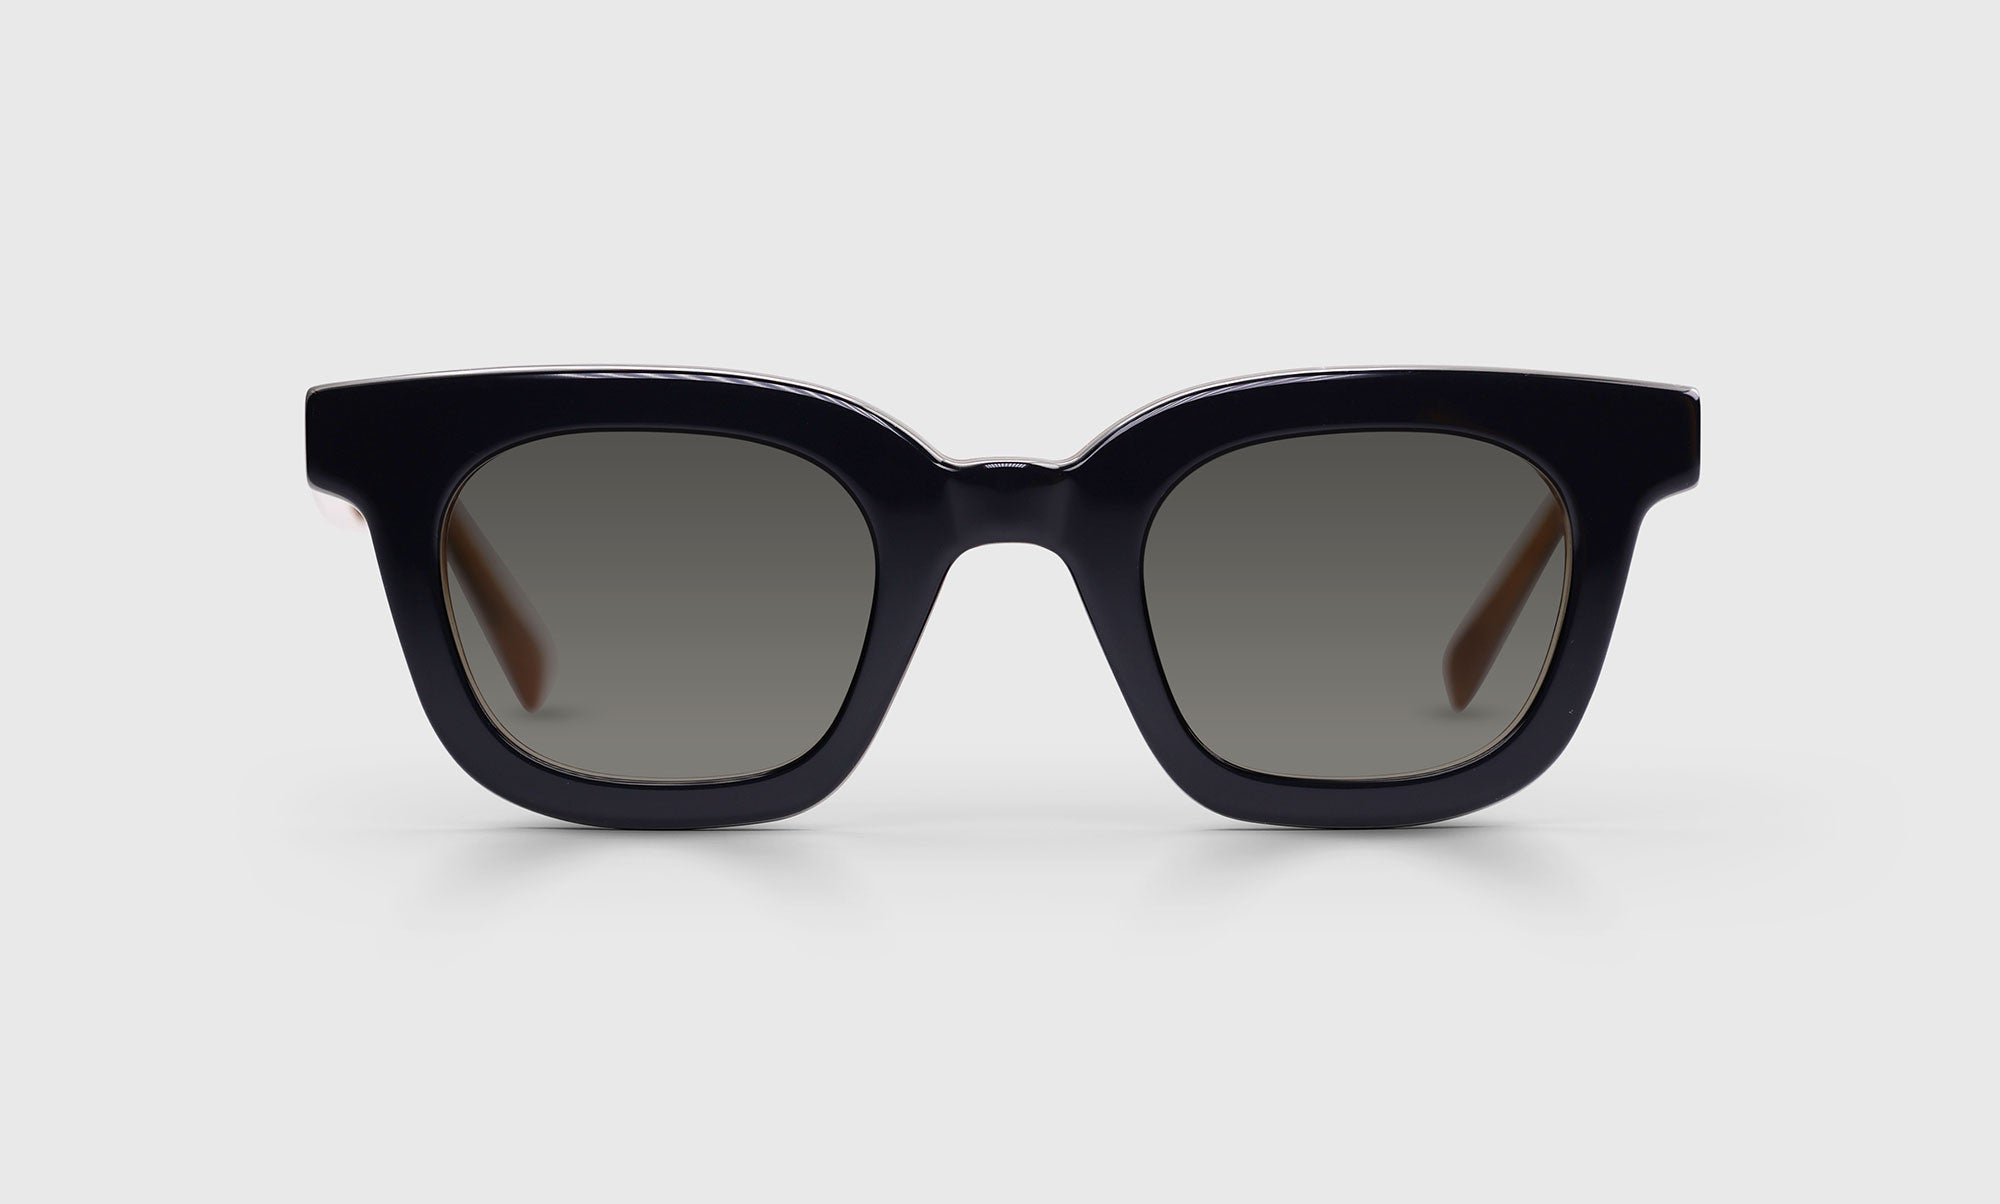 00-pg | eyebobs Signal Fire, Square, Average, Bifocal Reader Sunglasses, Polarized Grey Sunglasses